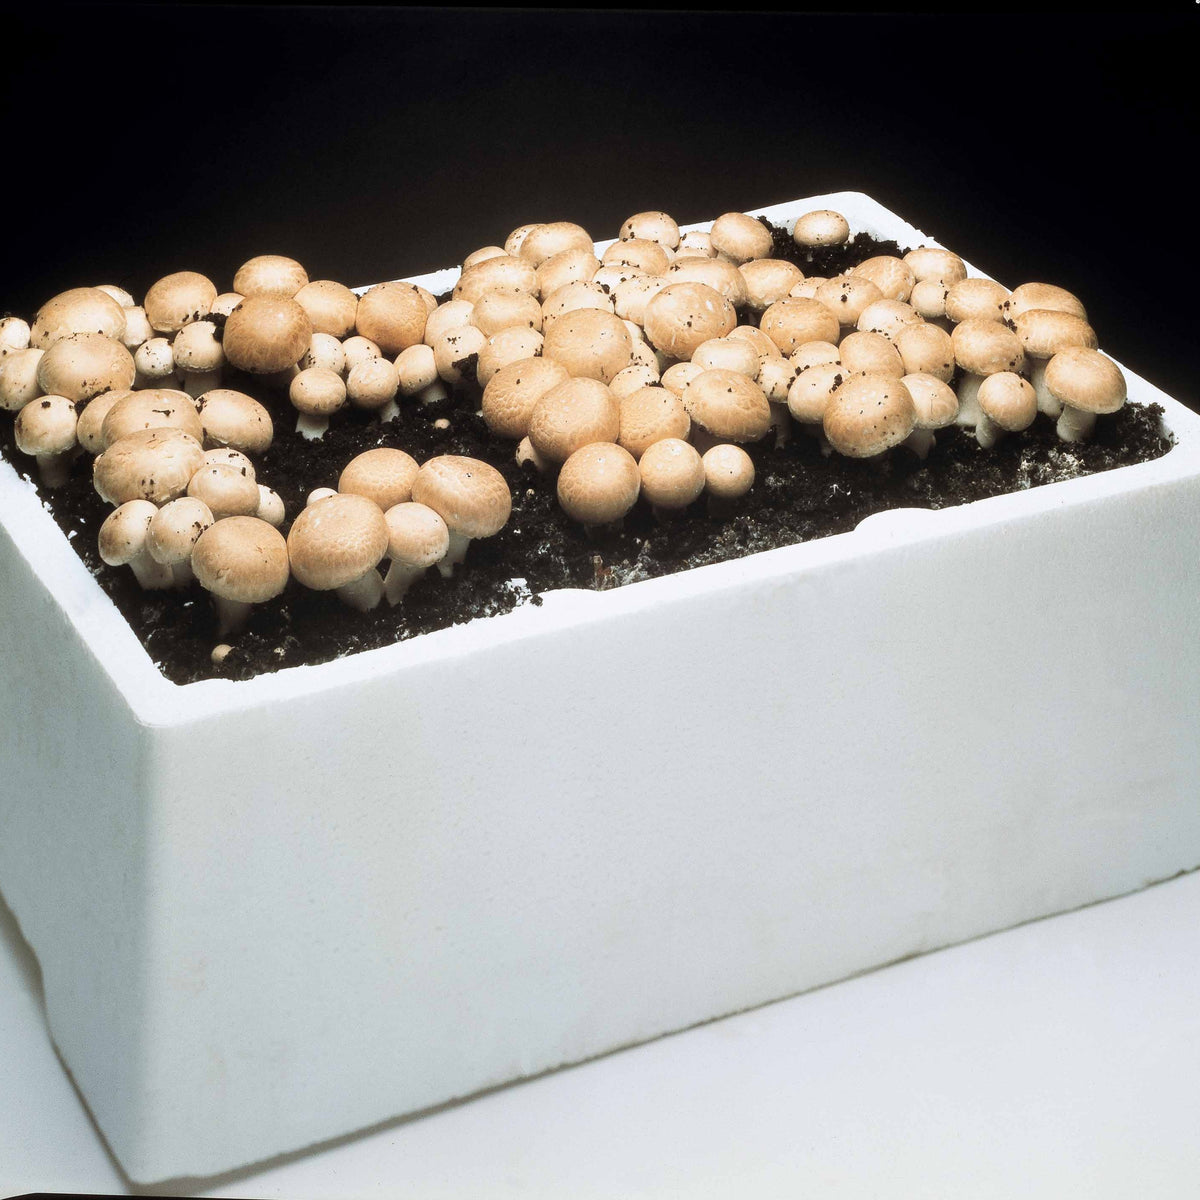 Kit culture champignons bruns minichamp